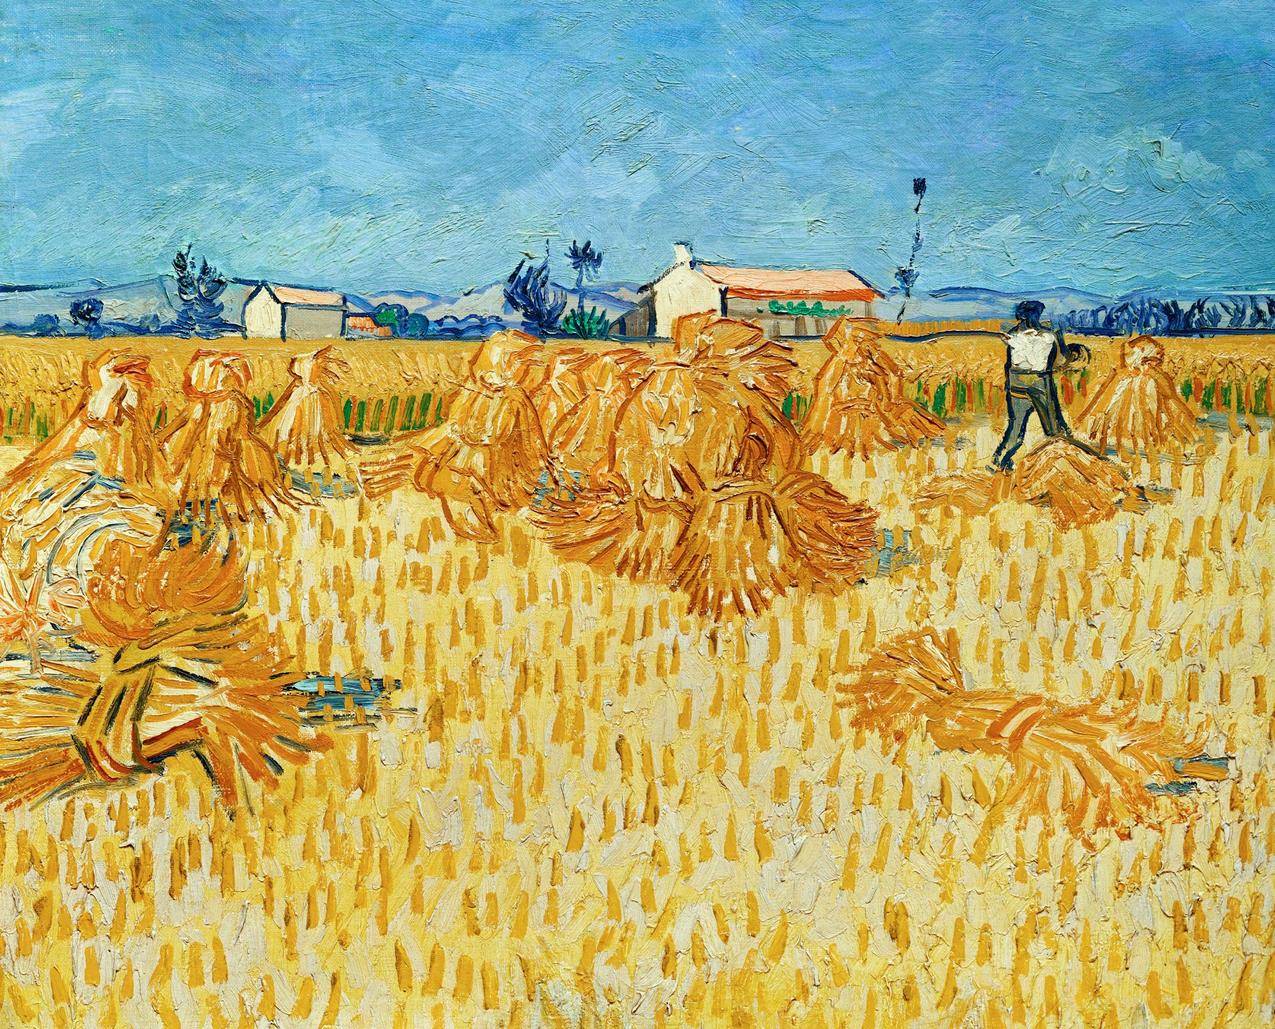 Wheat Field, 1888 - Vincent van Gogh - WikiArt.org